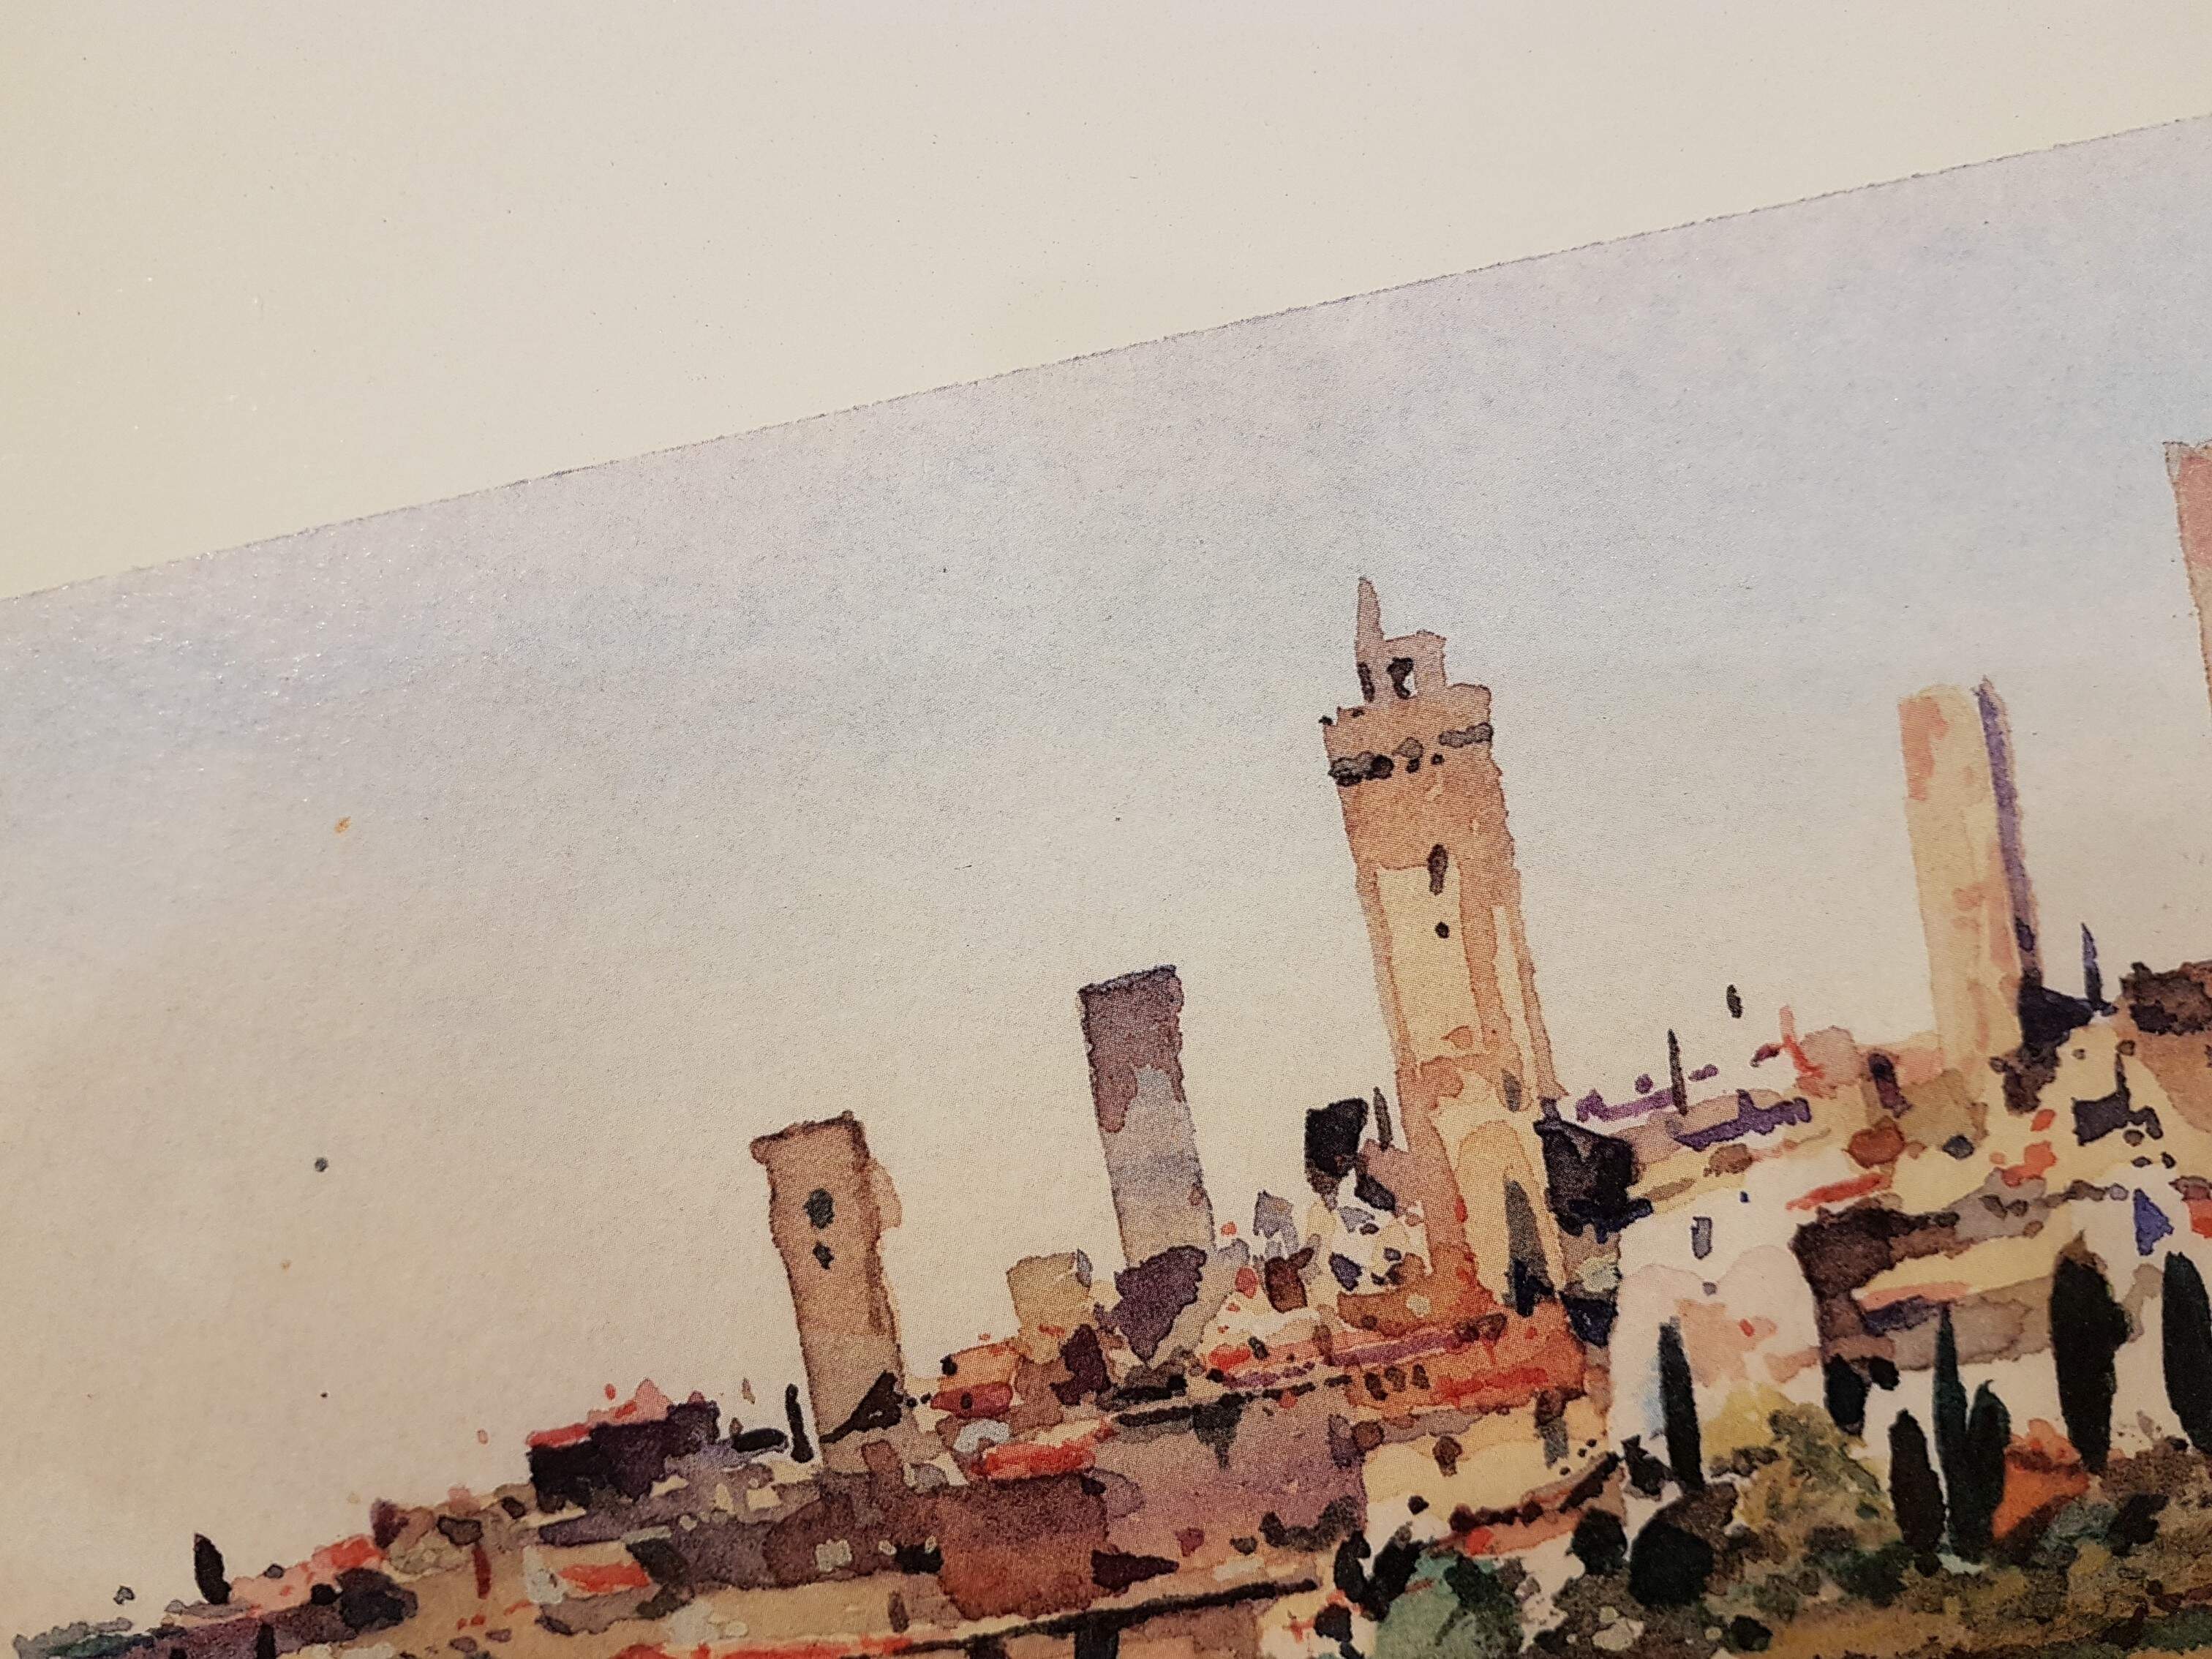 Sangimignano con papaveri con cornice - San Gimignano with poppies with frame